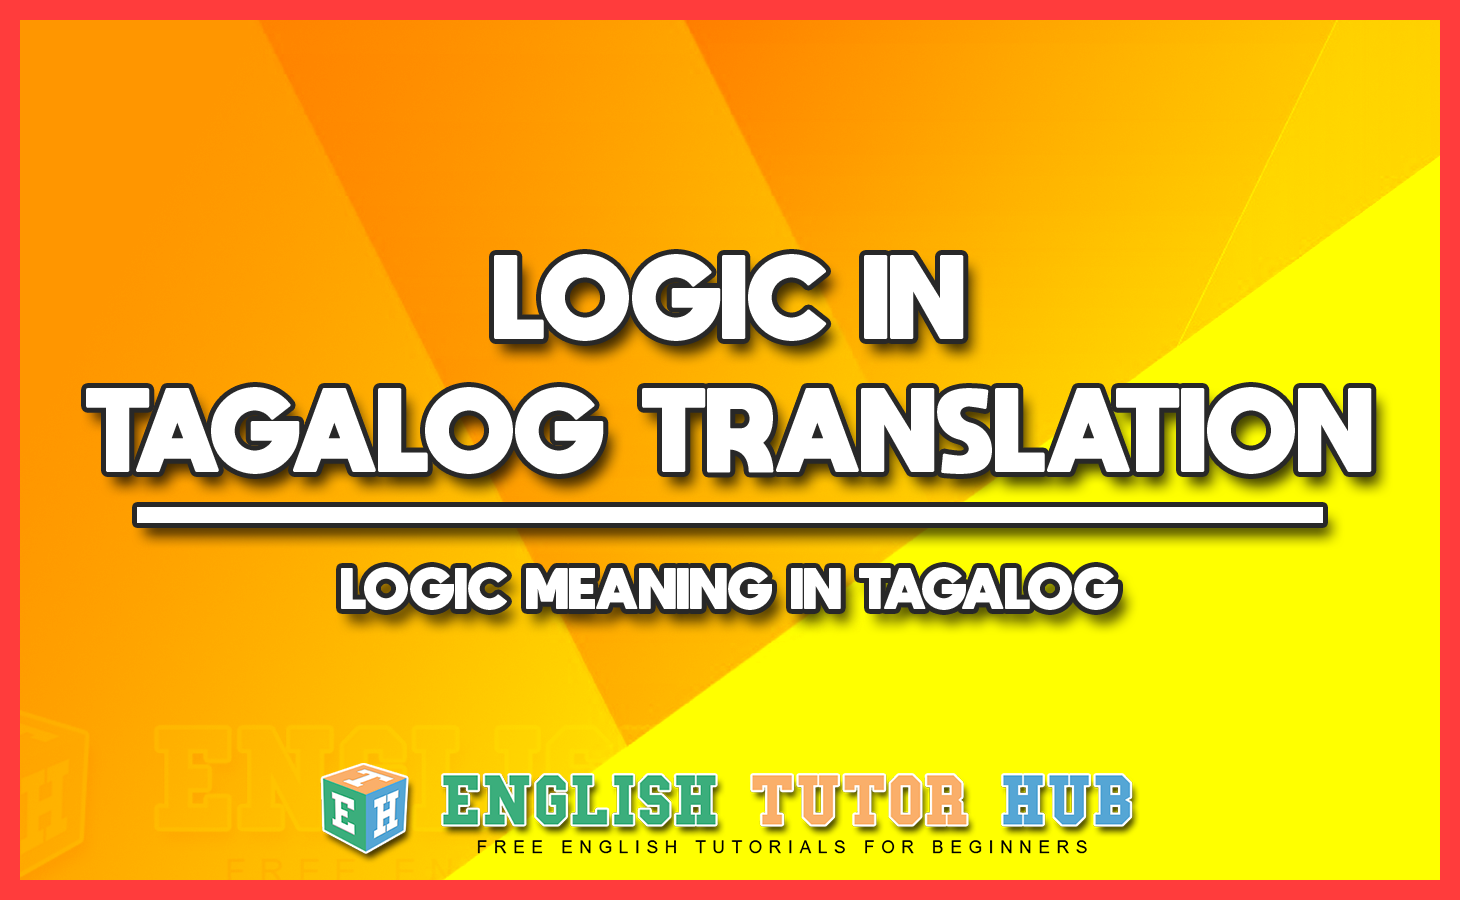 LOGIC IN TAGALOG TRANSLATION - LOGIC MEANING IN TAGALOG